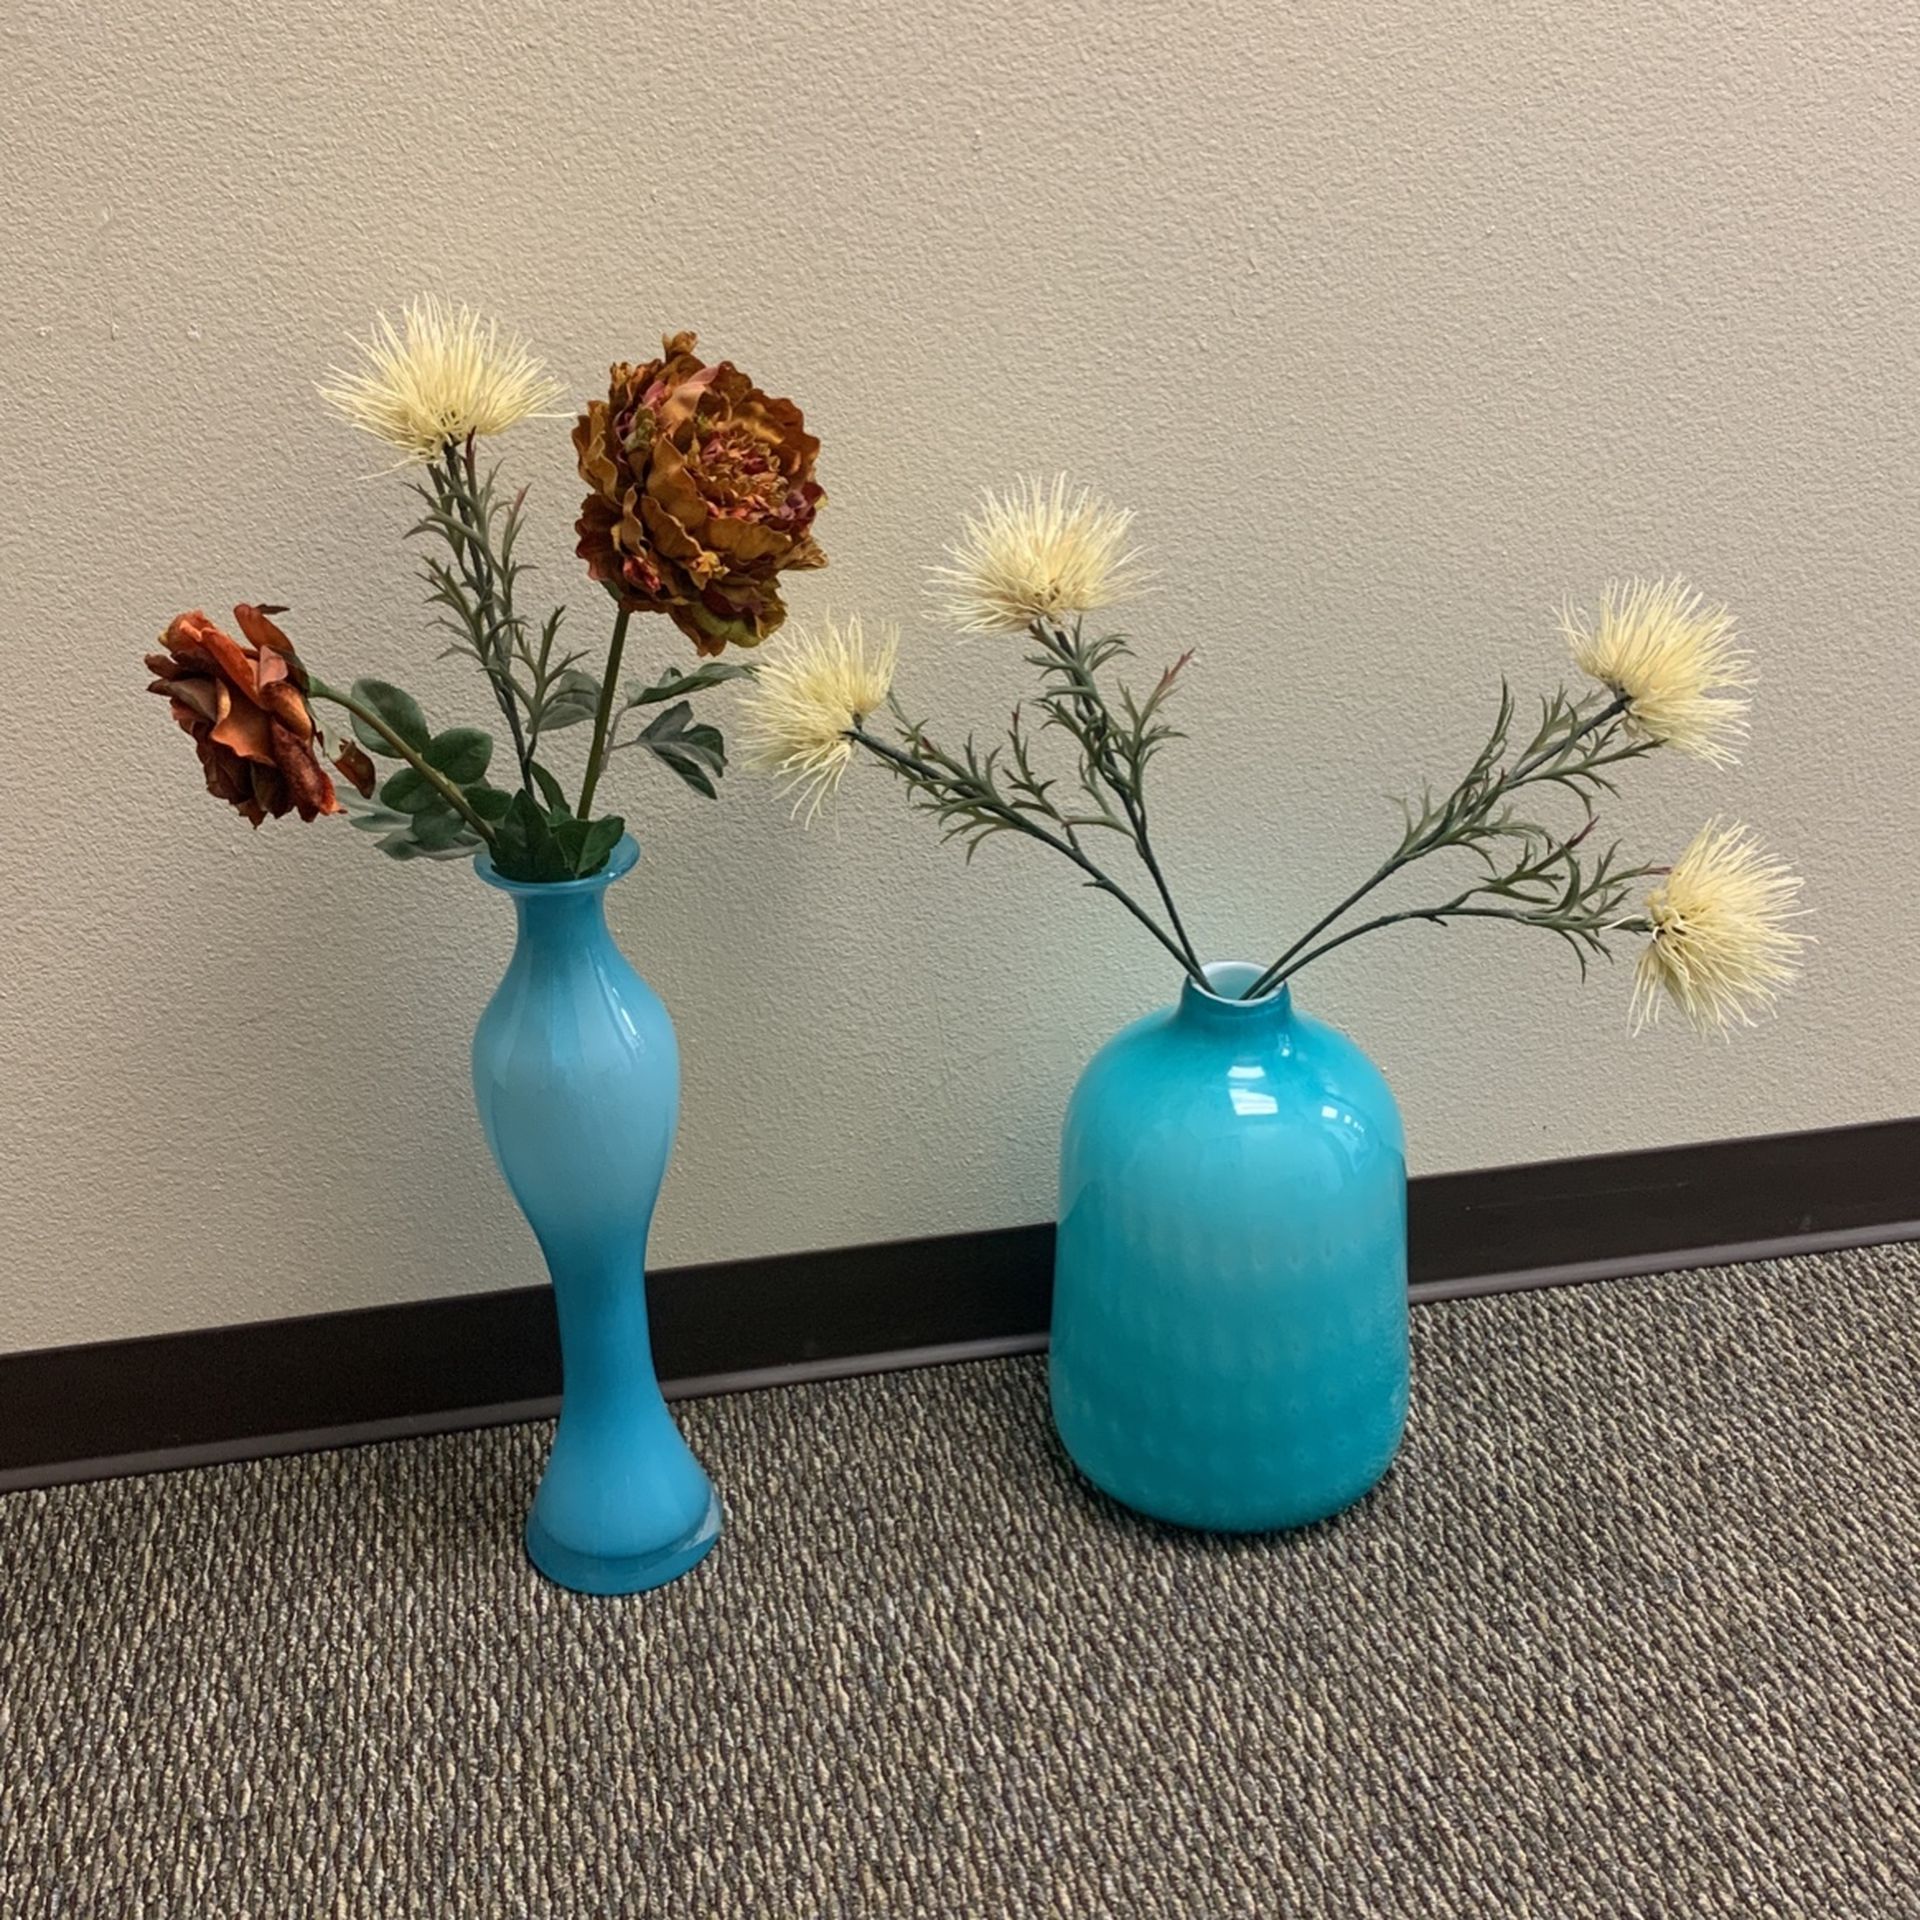 Ceramic  Vases With Flowers (set)